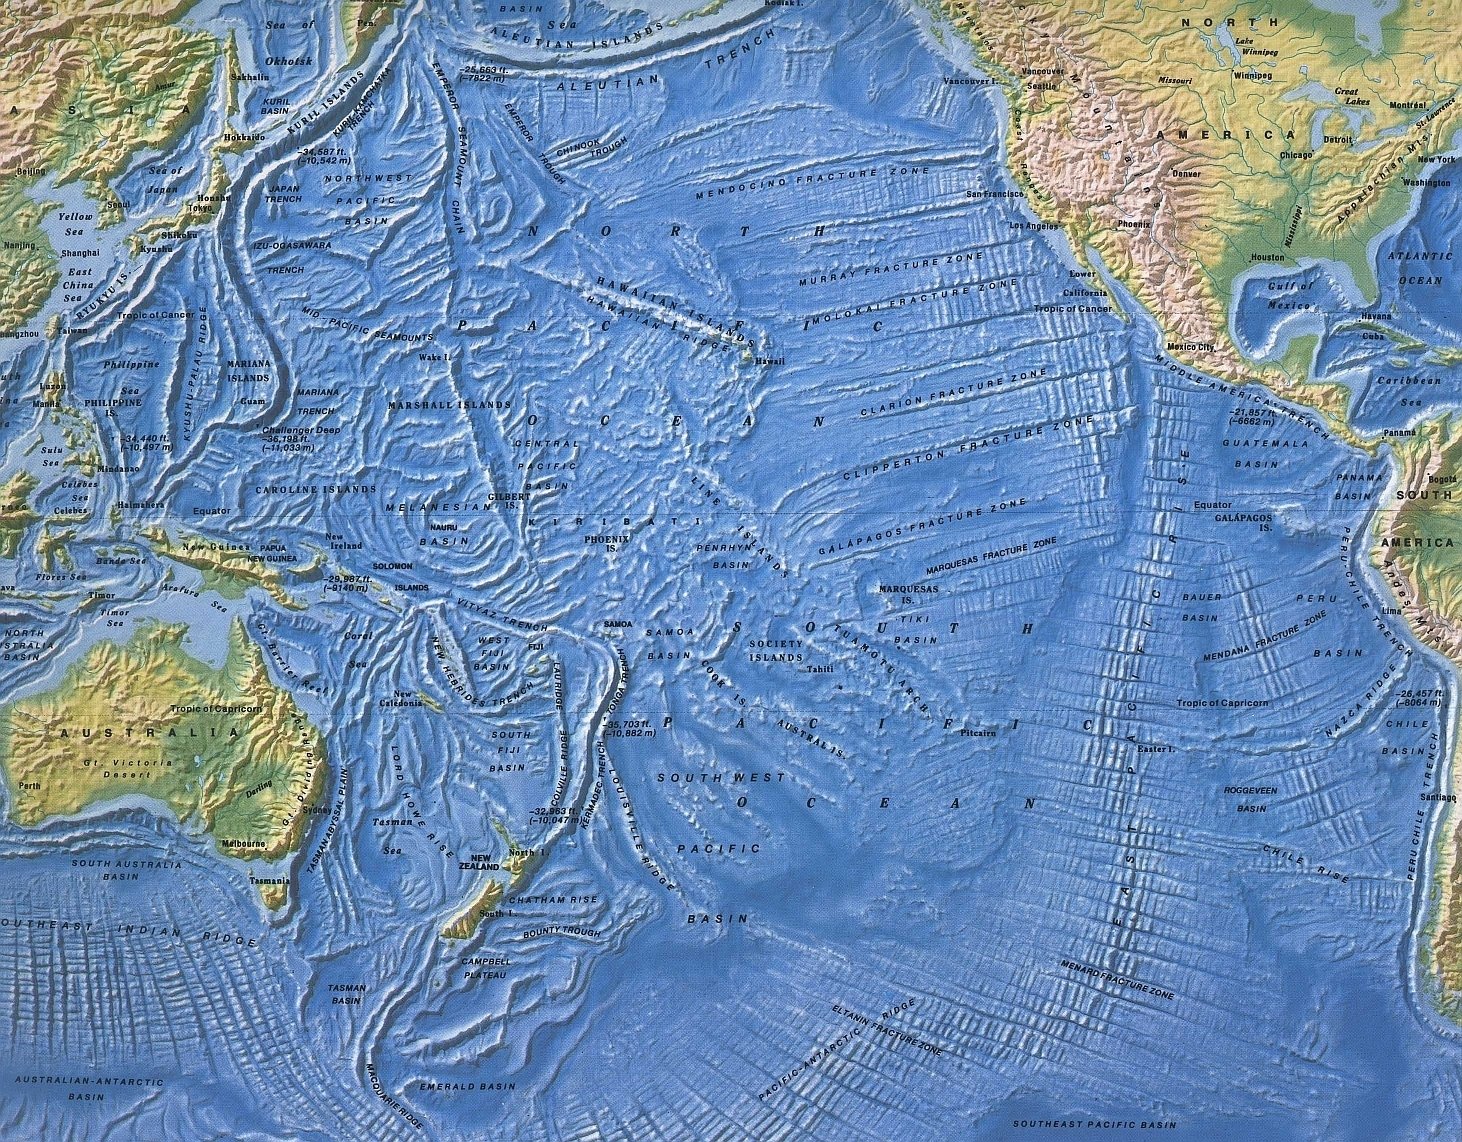 Перешеек тихого океана. Карта рельефа Тихого океана. Карта рельефа дна Тихого океана. Рельеф дна Тихого океана. Рельеф дна океана Тихого океана карта.